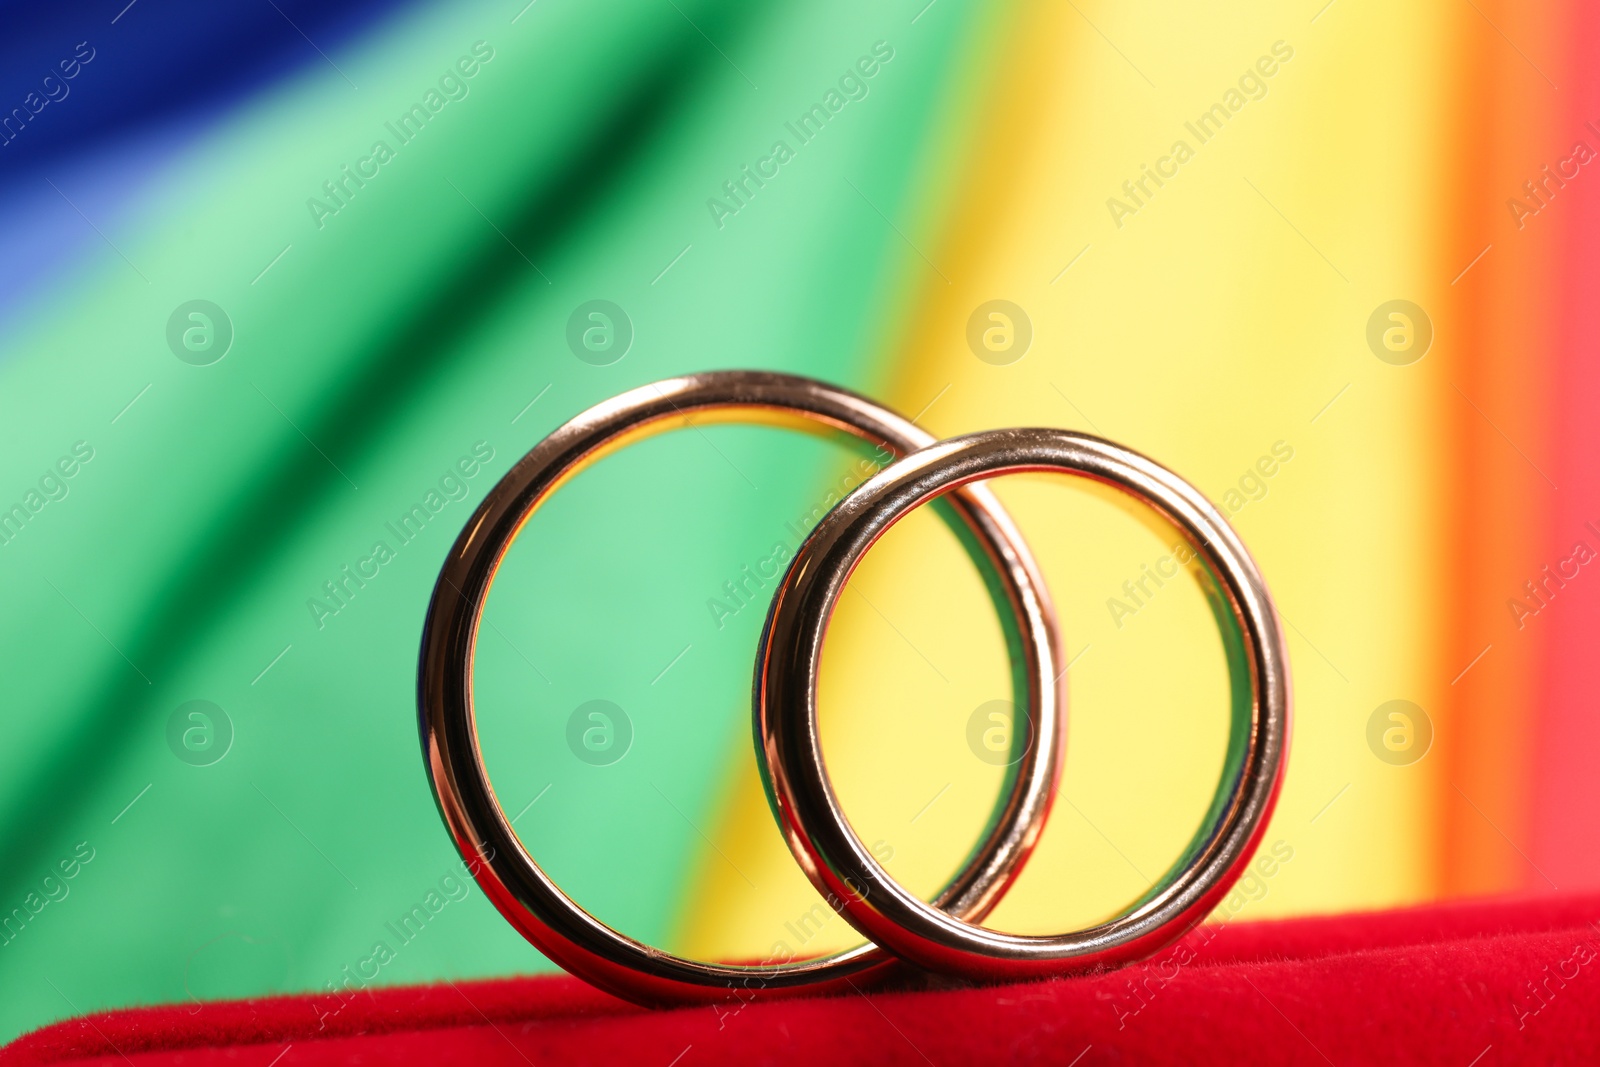 Photo of Wedding rings on rainbow LGBT flag, closeup